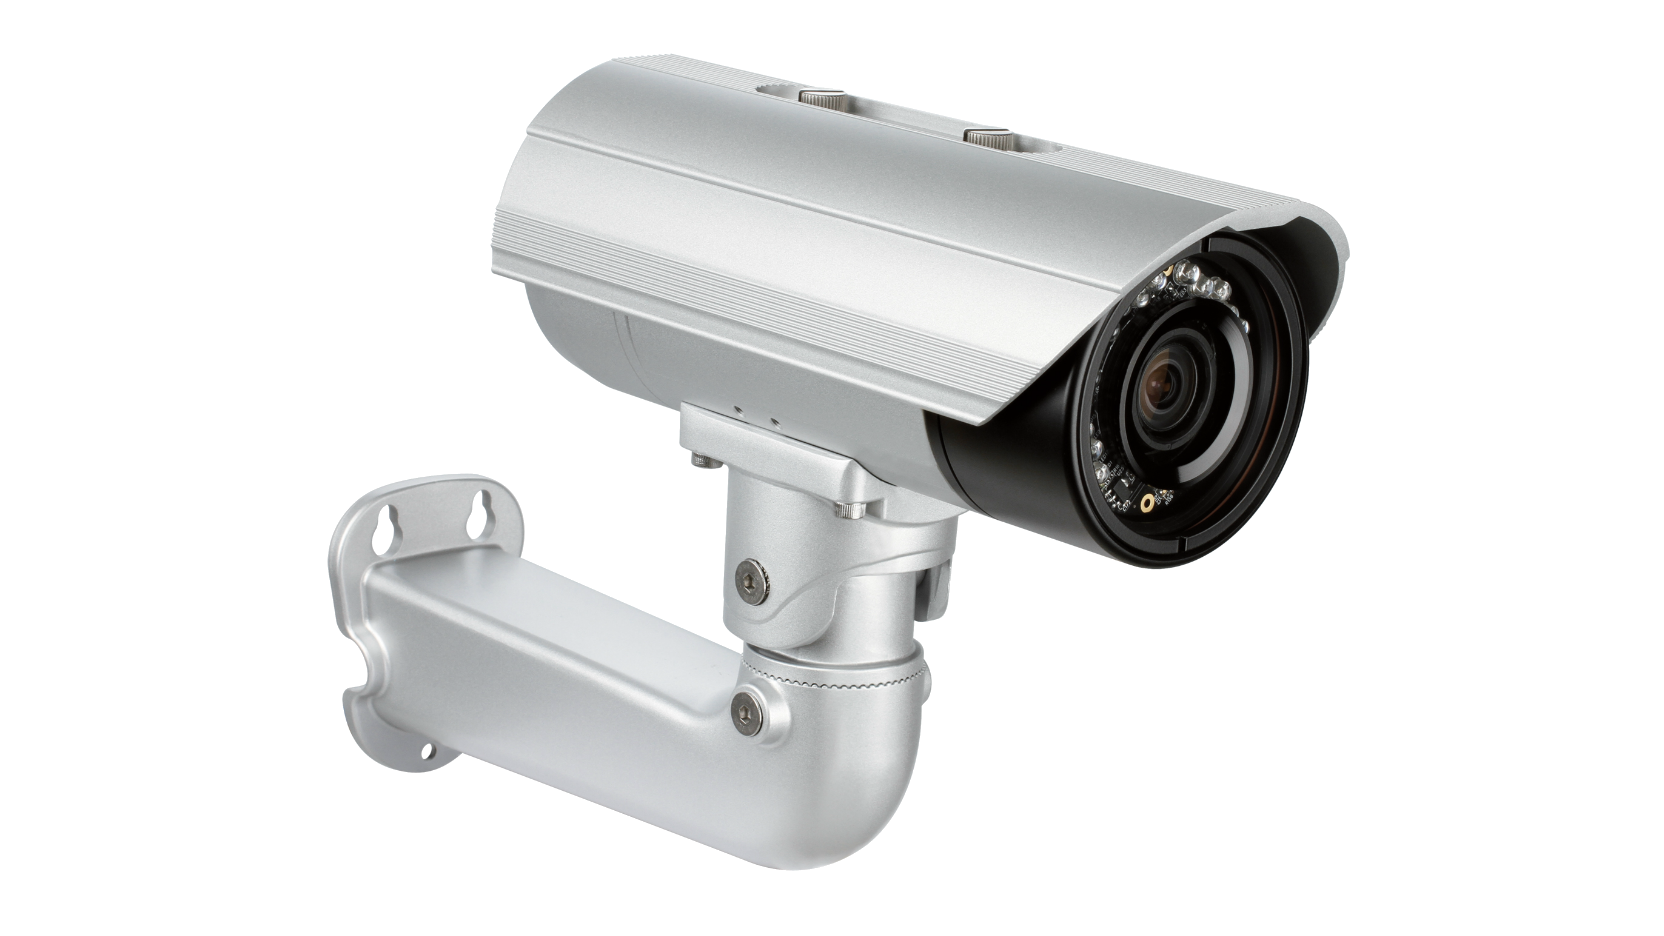 DCS-7110 - D-LINK 230V 10/100Base-T Network Surveillance Camera